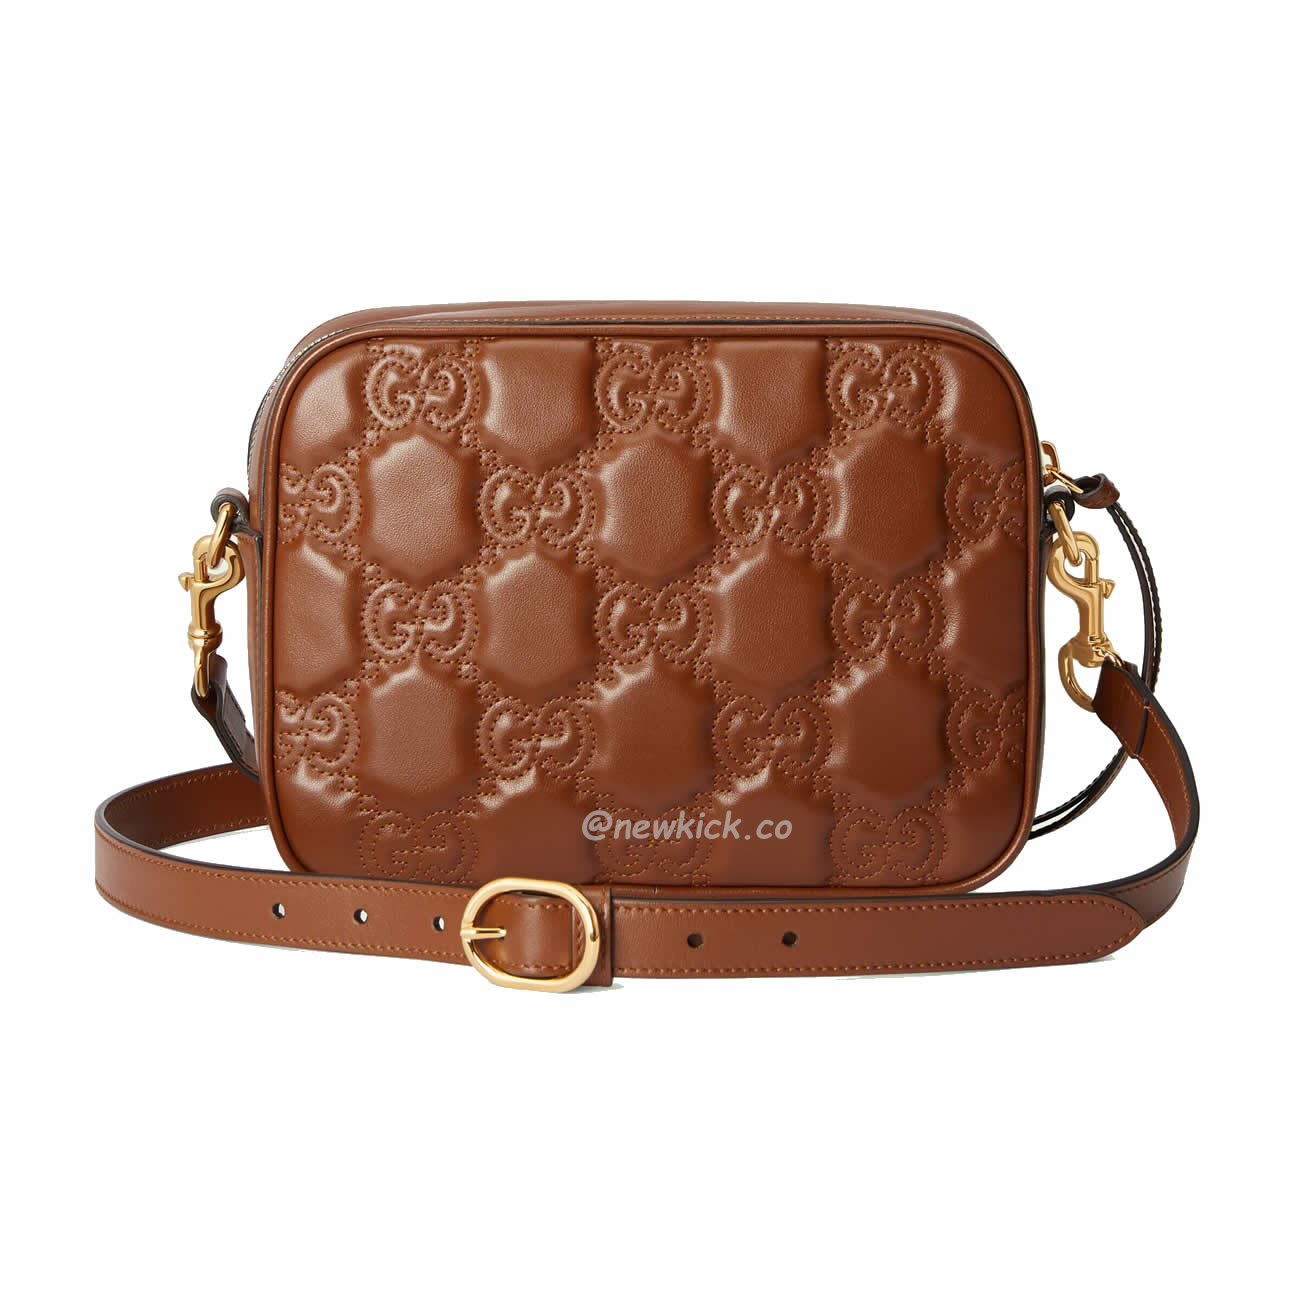 Gucci Gg Matelass Small Bag Product Details 702234 Um8hg 1046 (11) - newkick.org